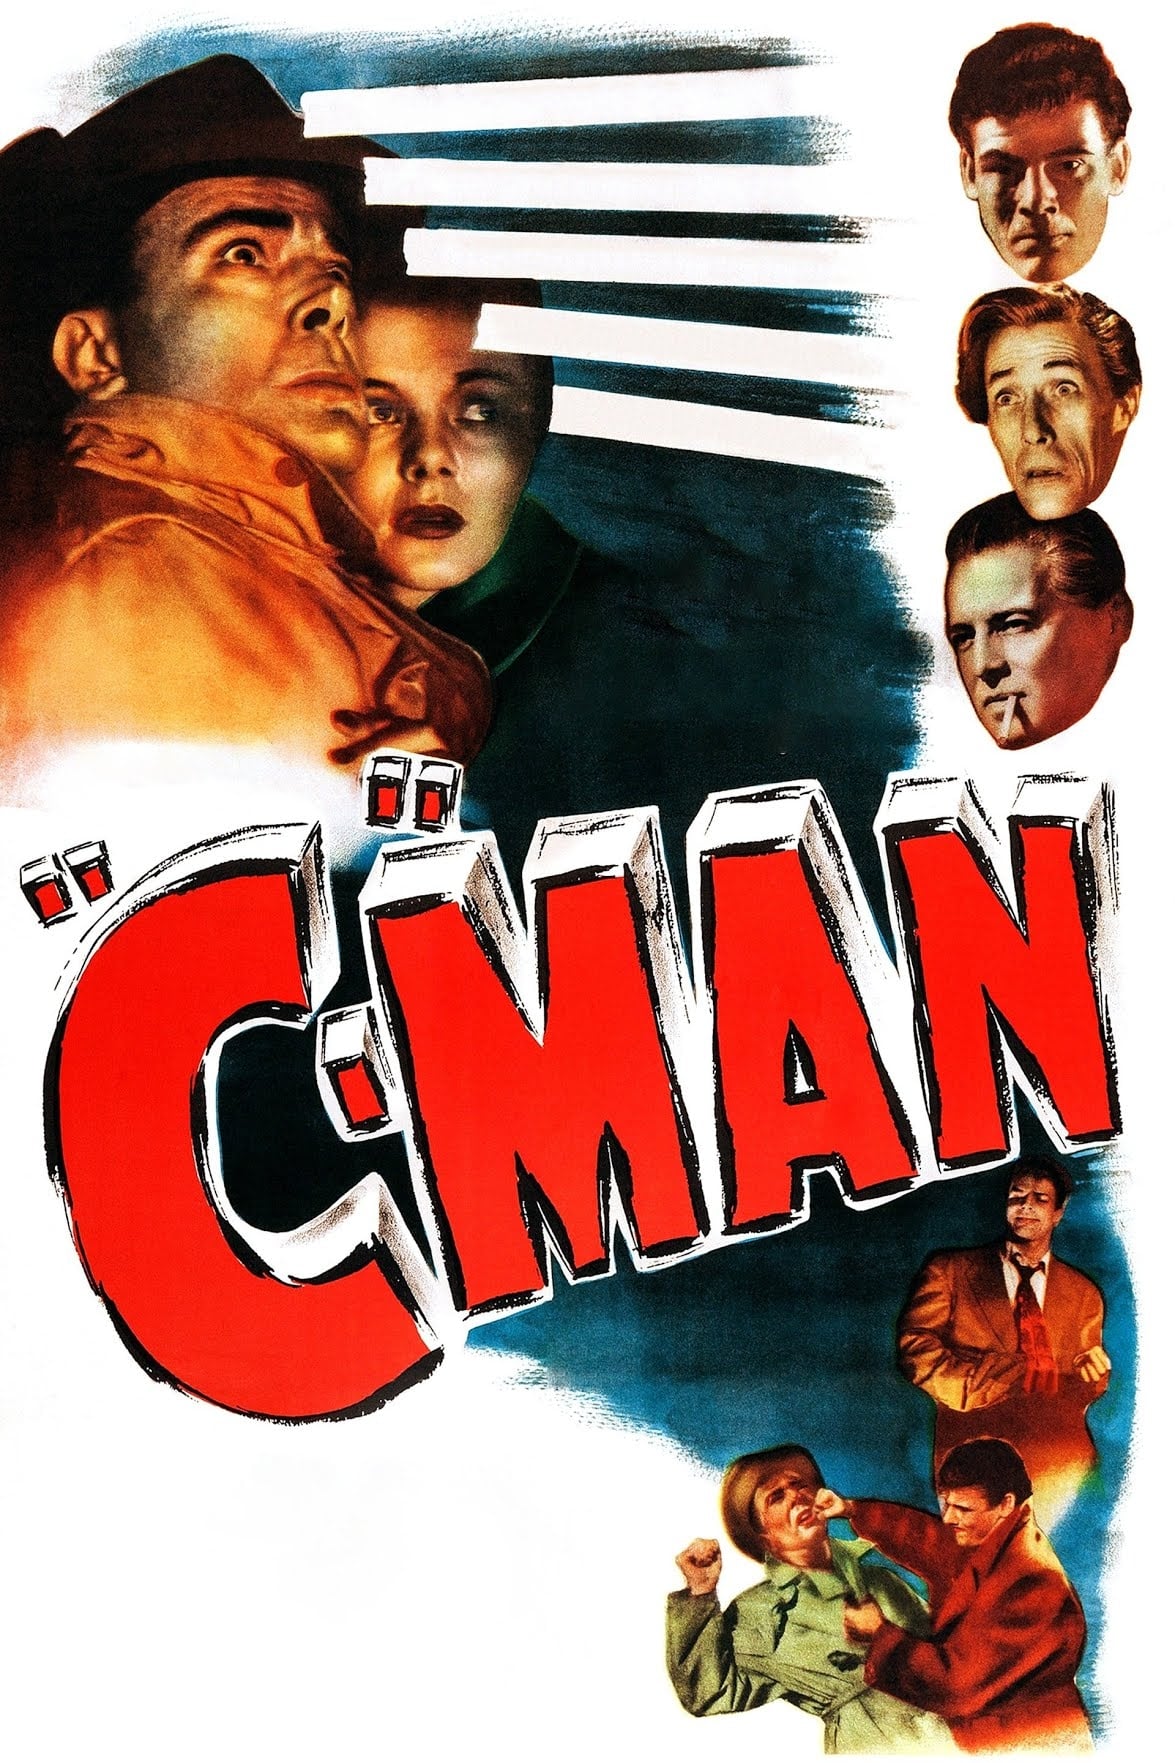 C-Man (1949)